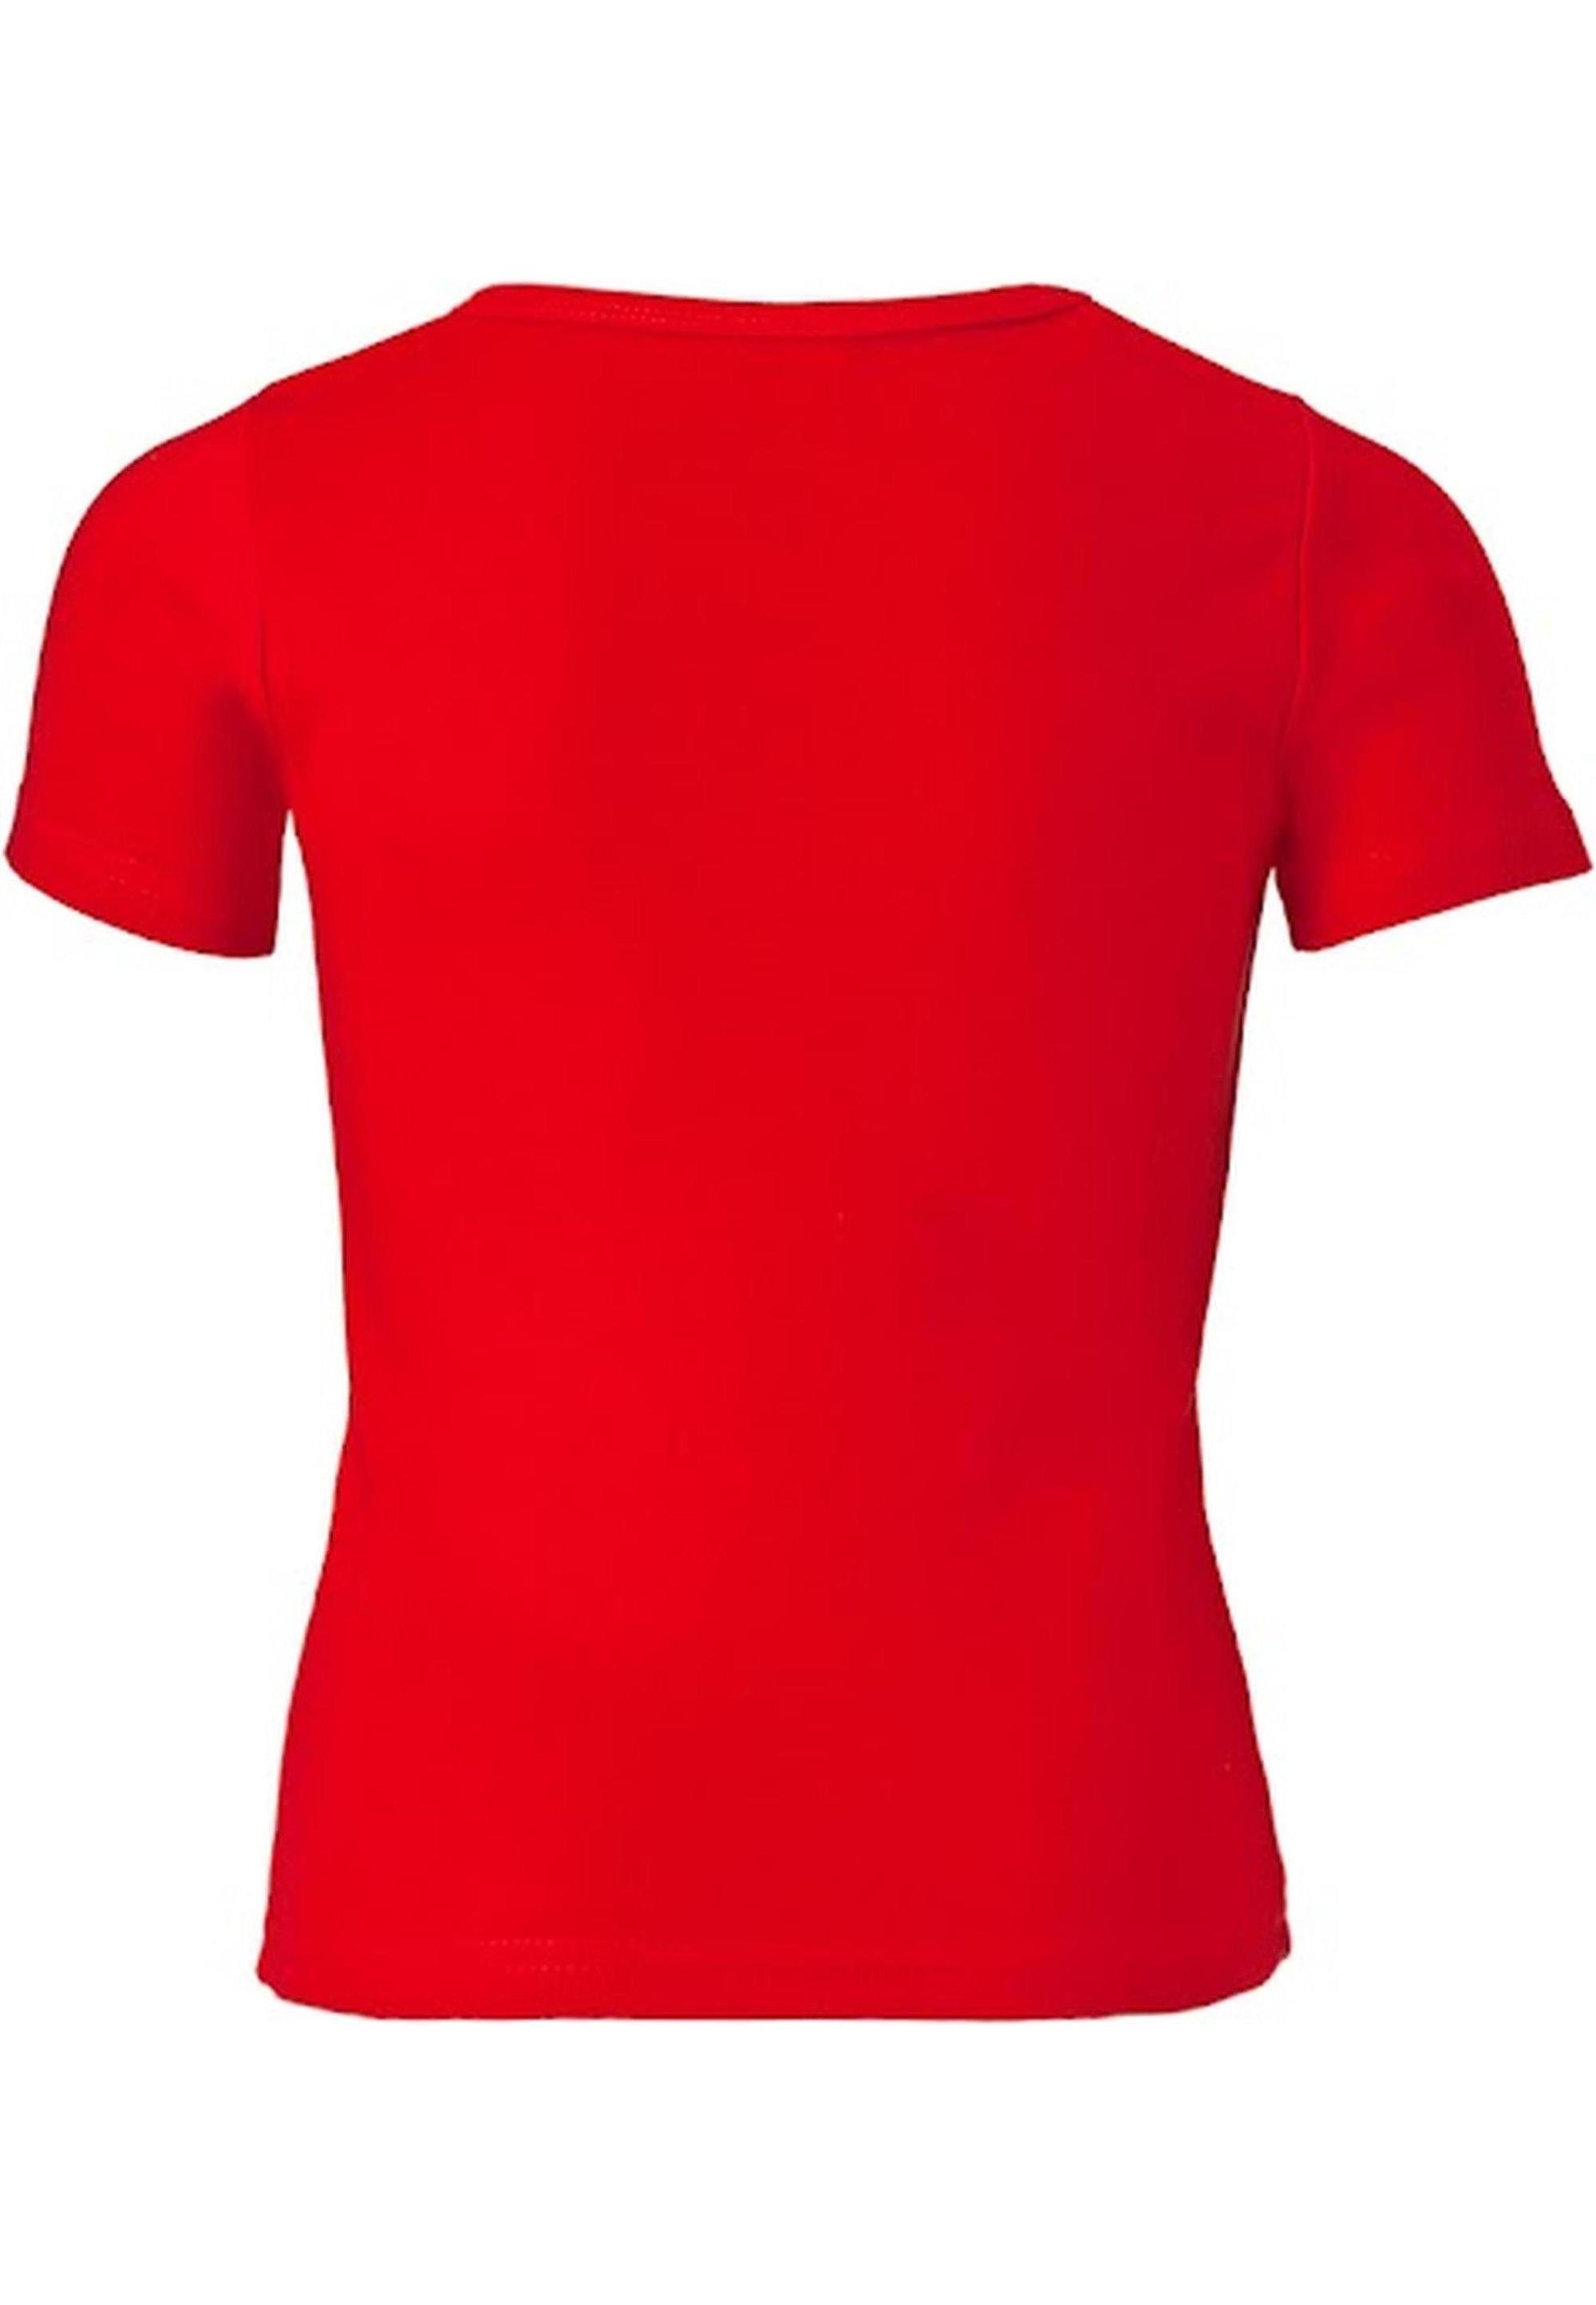 mit Maus LOGOSHIRT lizenziertem T-Shirt Die Originaldesign rot